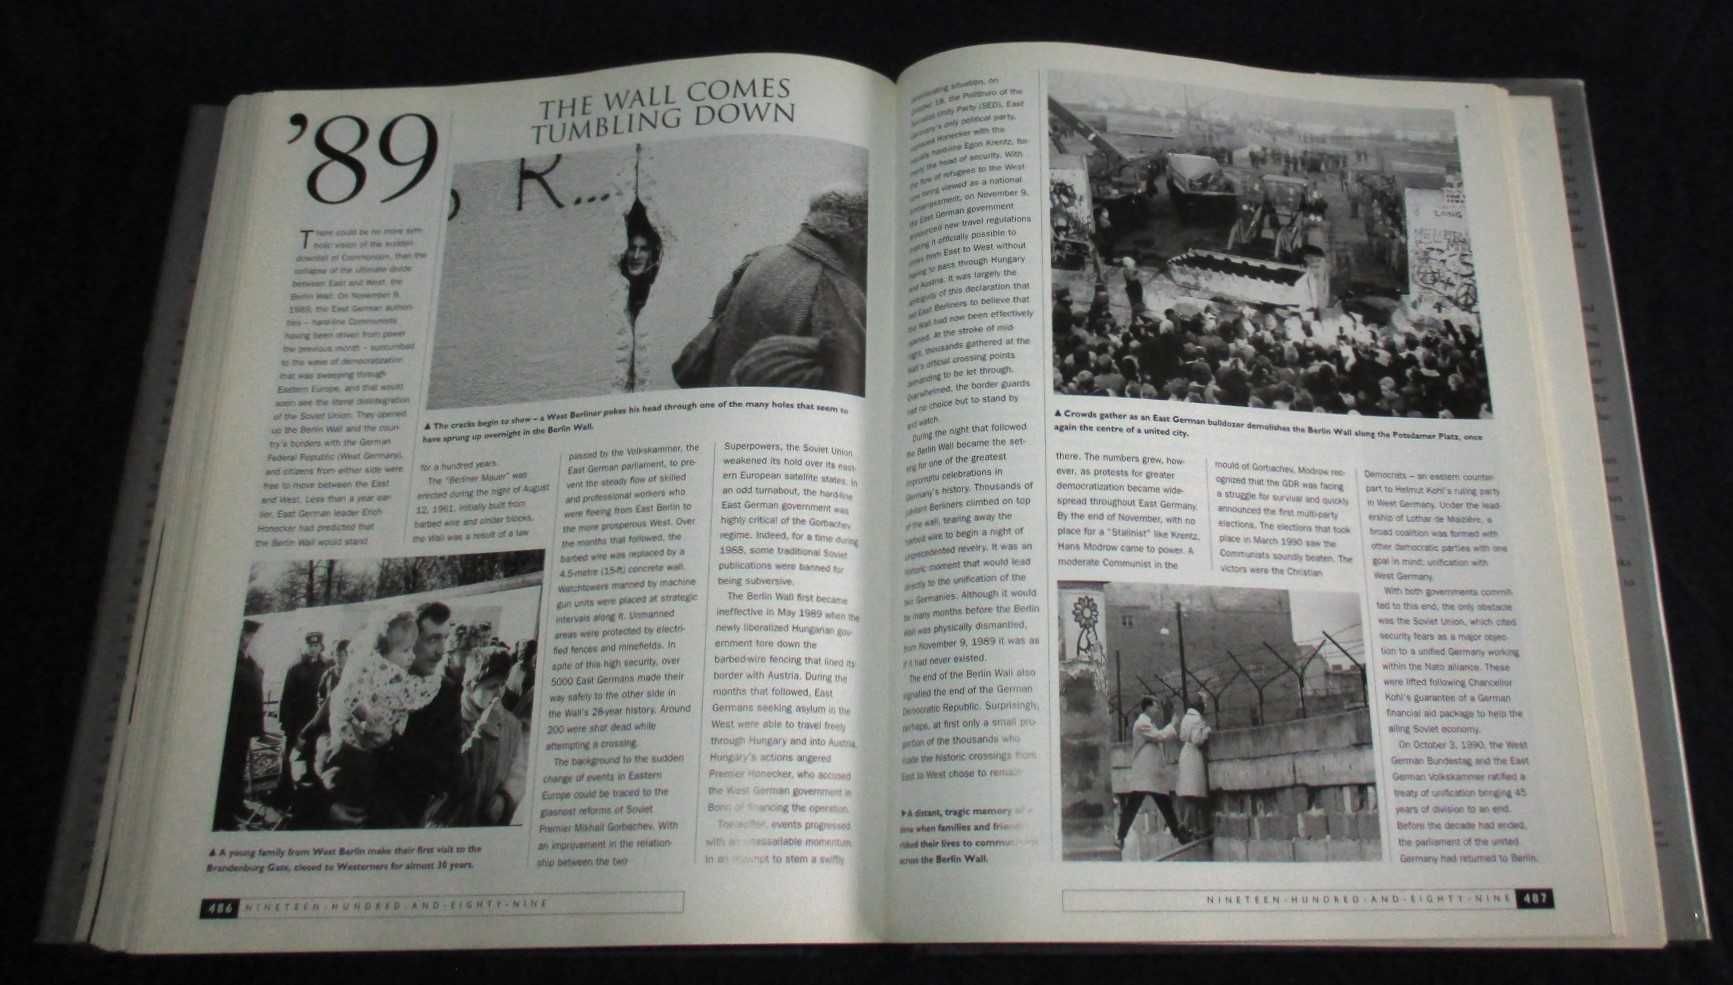 Livro ITV Visual History of the Twentieth Century